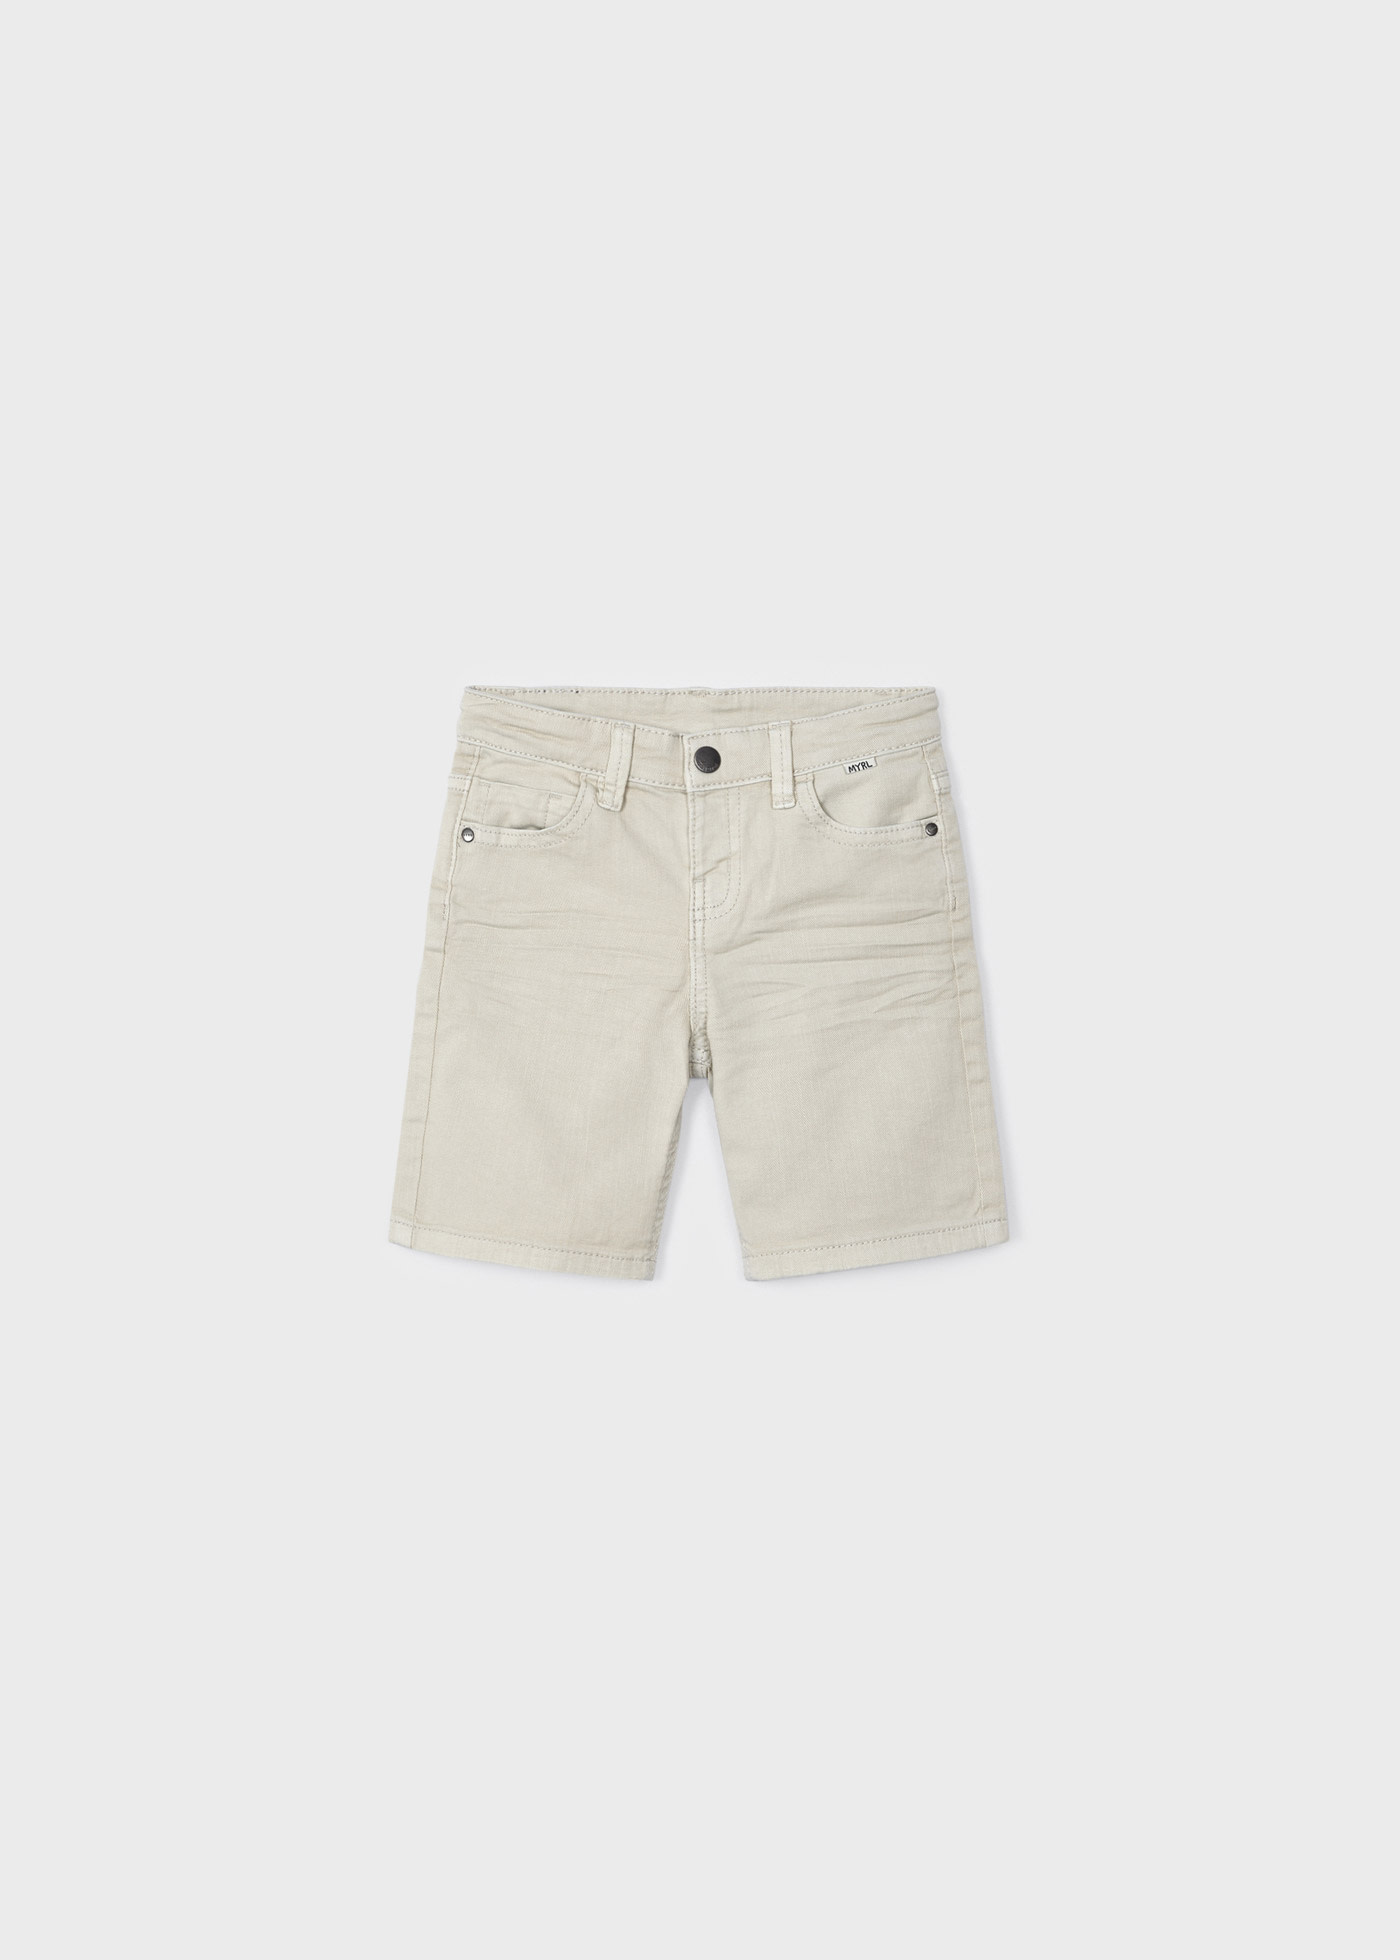 Sustainable cotton shorts with adjustable waistband boy